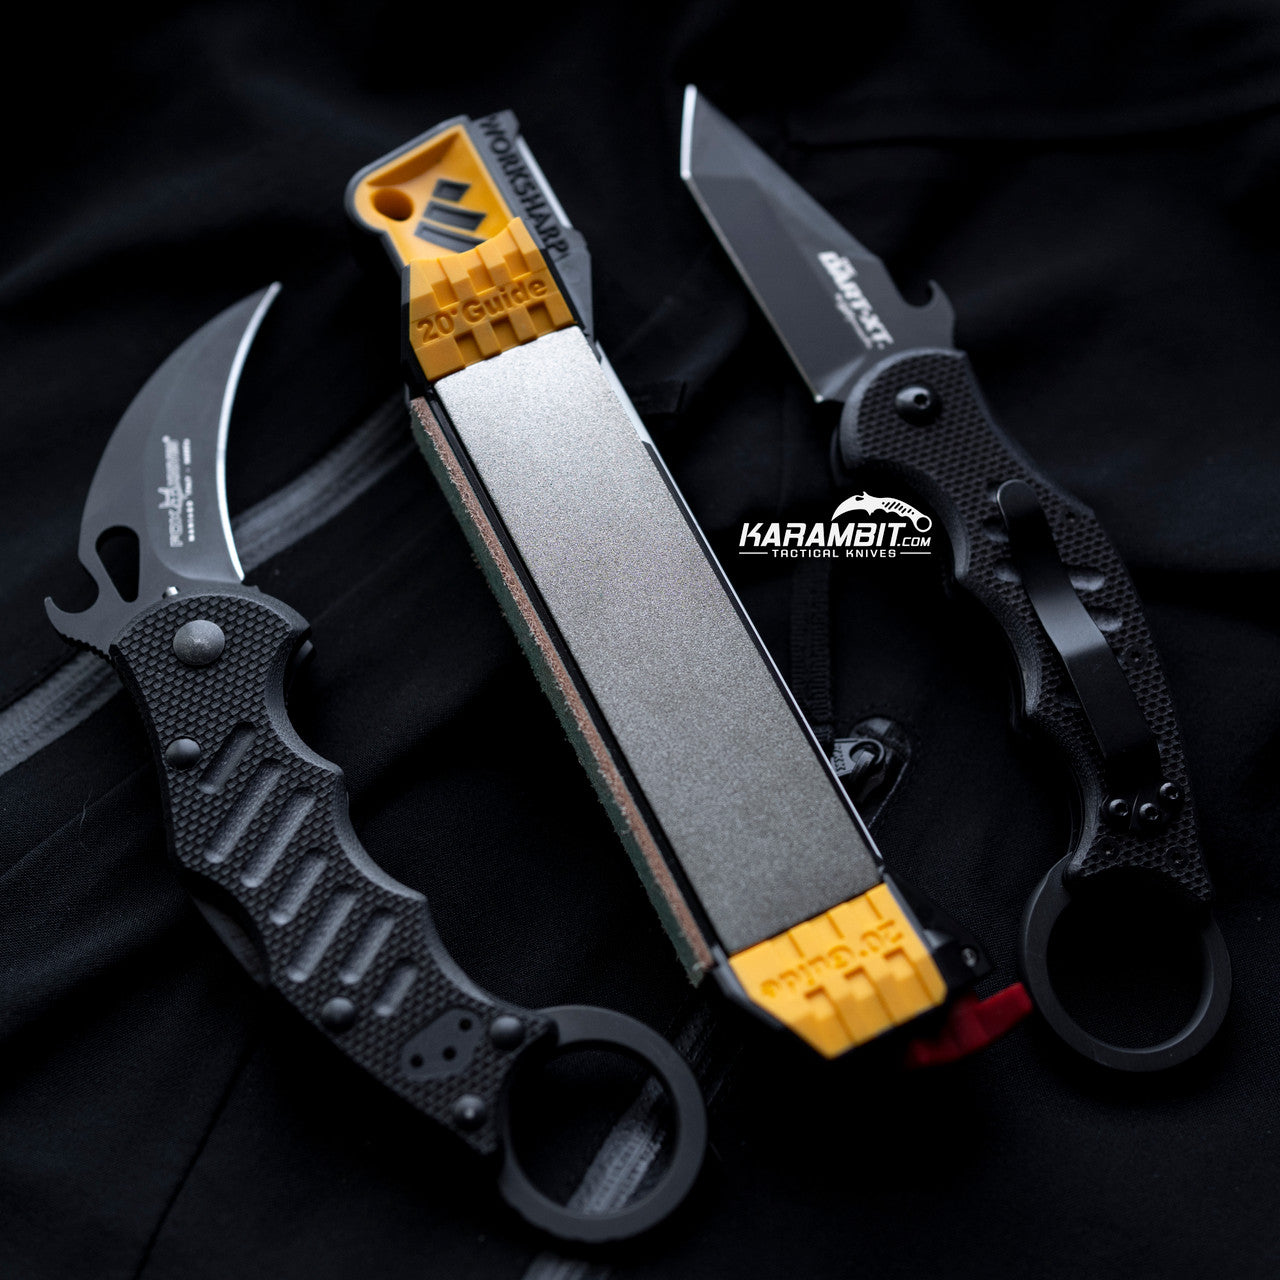 WORK SHARP Knife & Tool Sharpener Ken Onion Edition + WorkSharp Guided  Field Sharpener